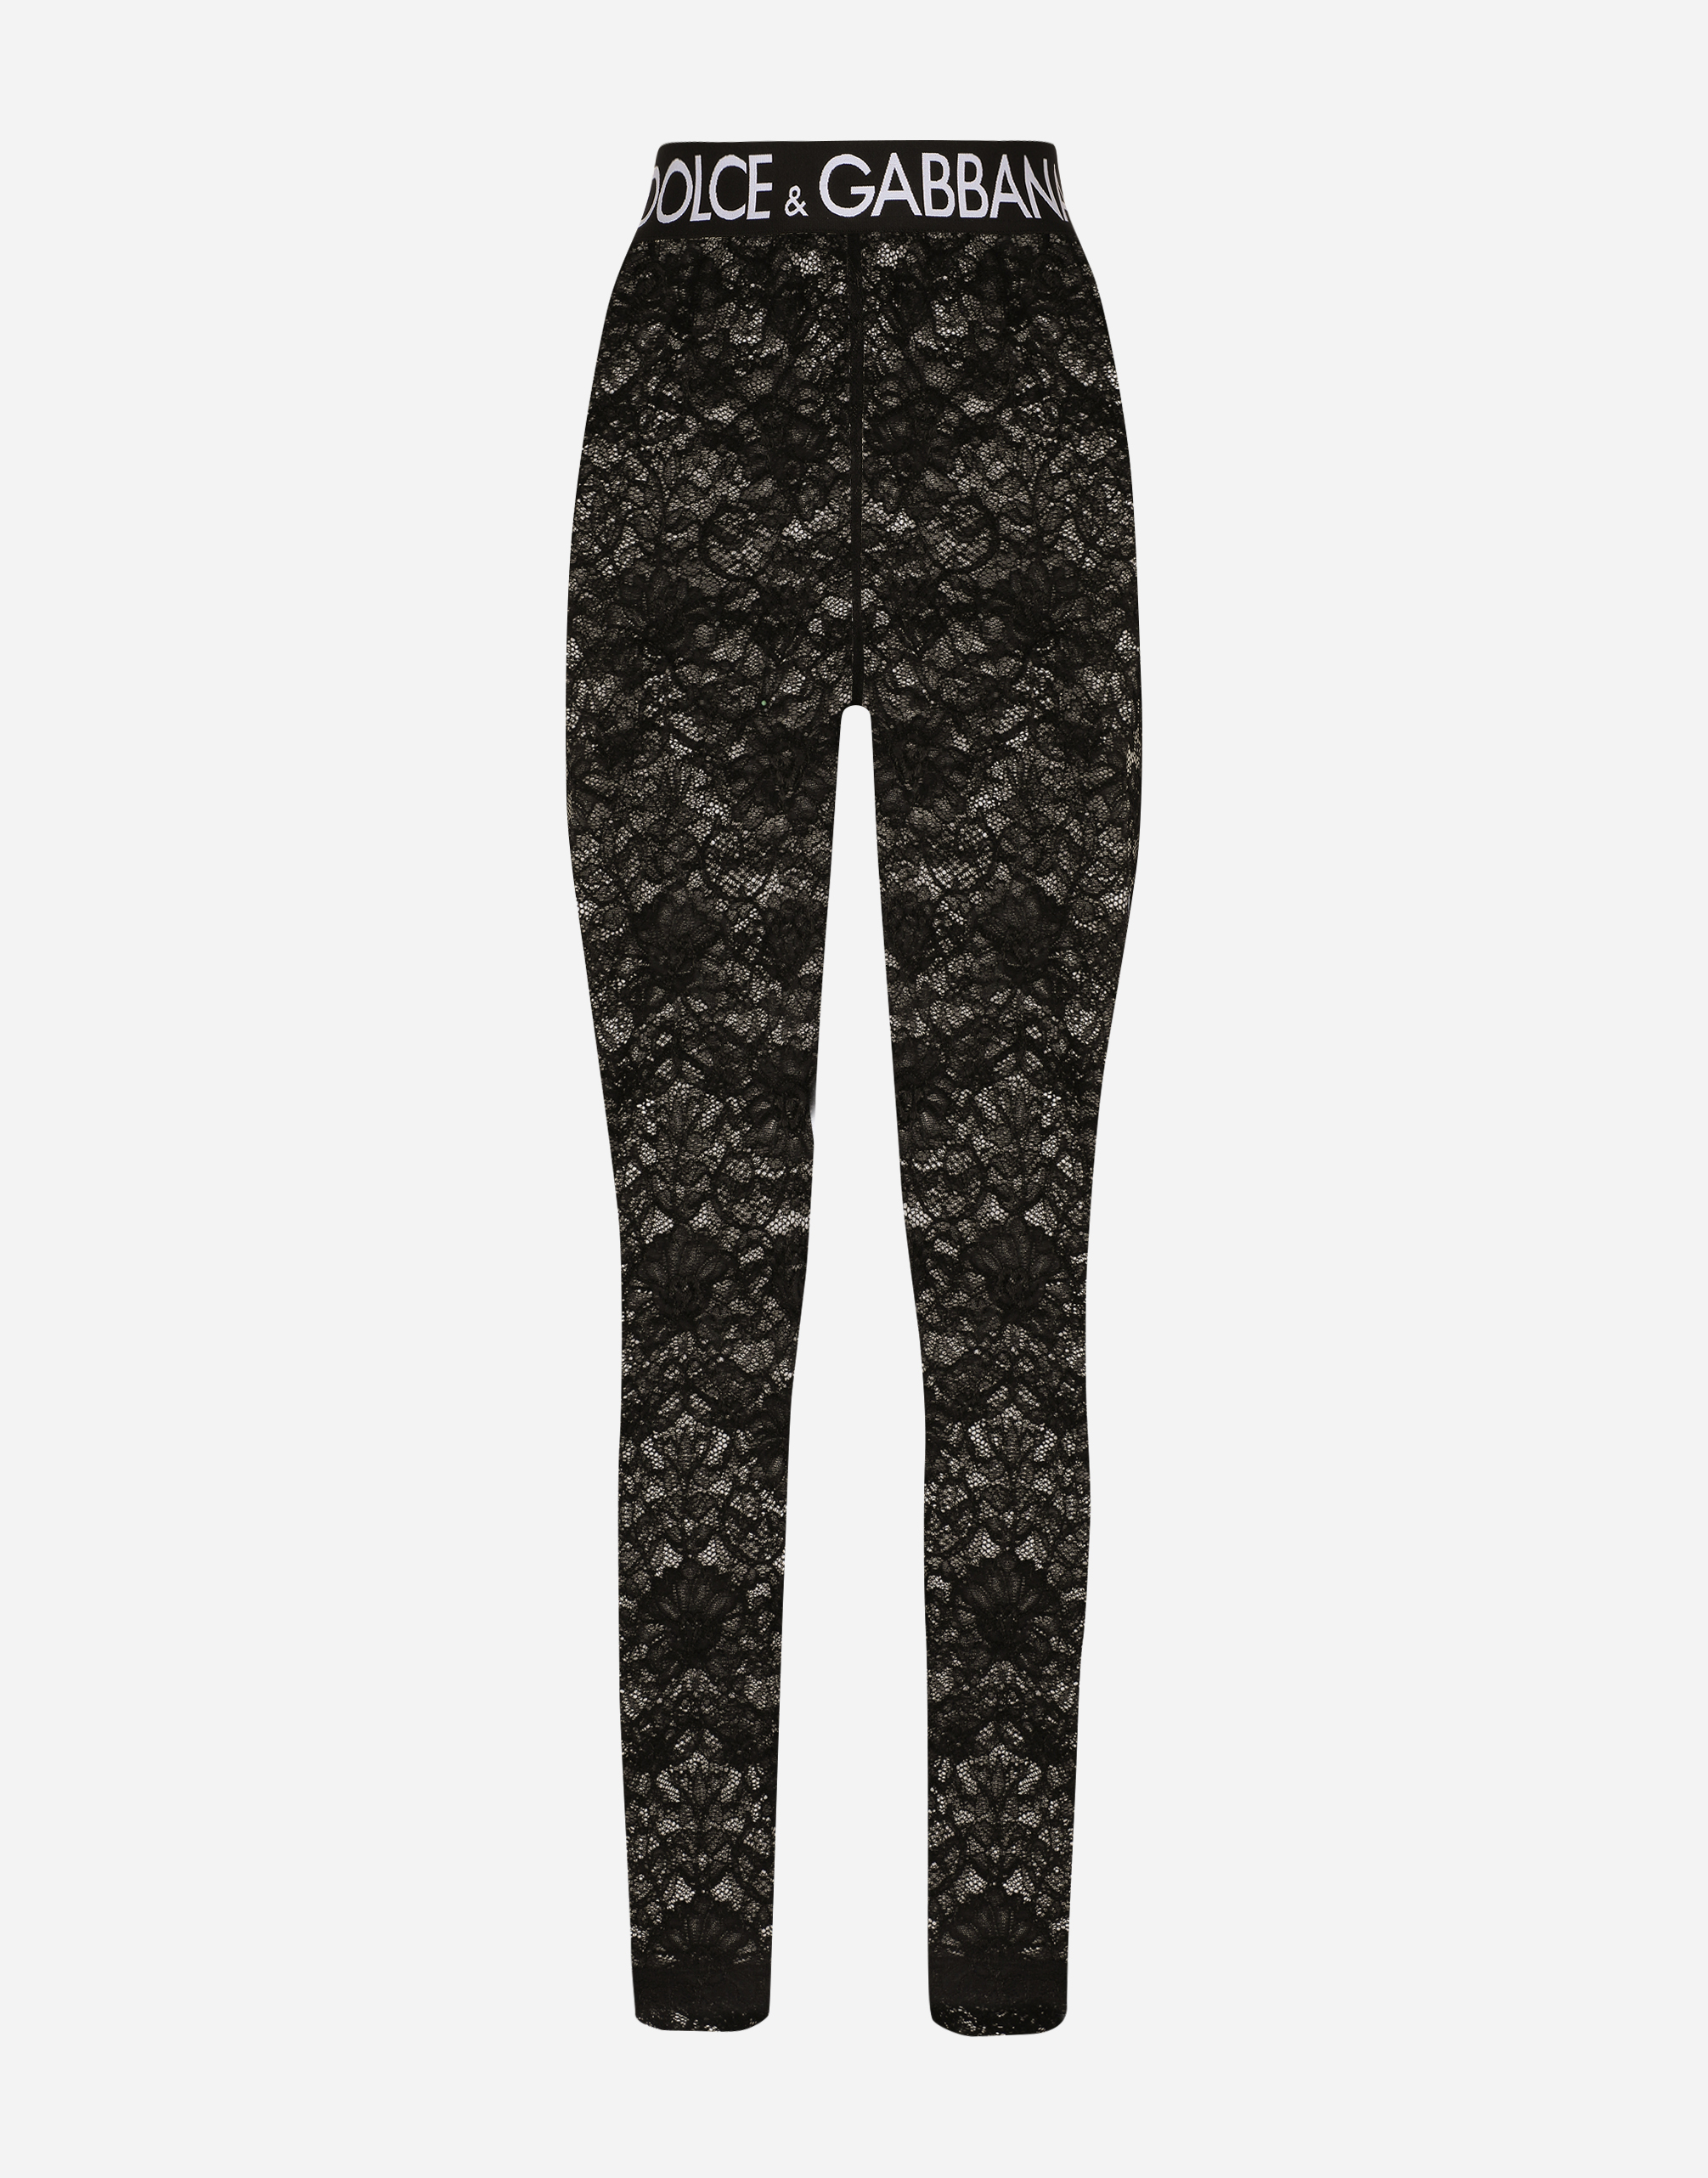 Dolce&Gabbana women's Satin leggings with logo - buy for 563900 KZT in the  official Viled online store, art. FTCNAT FURMV.M1512_40_232